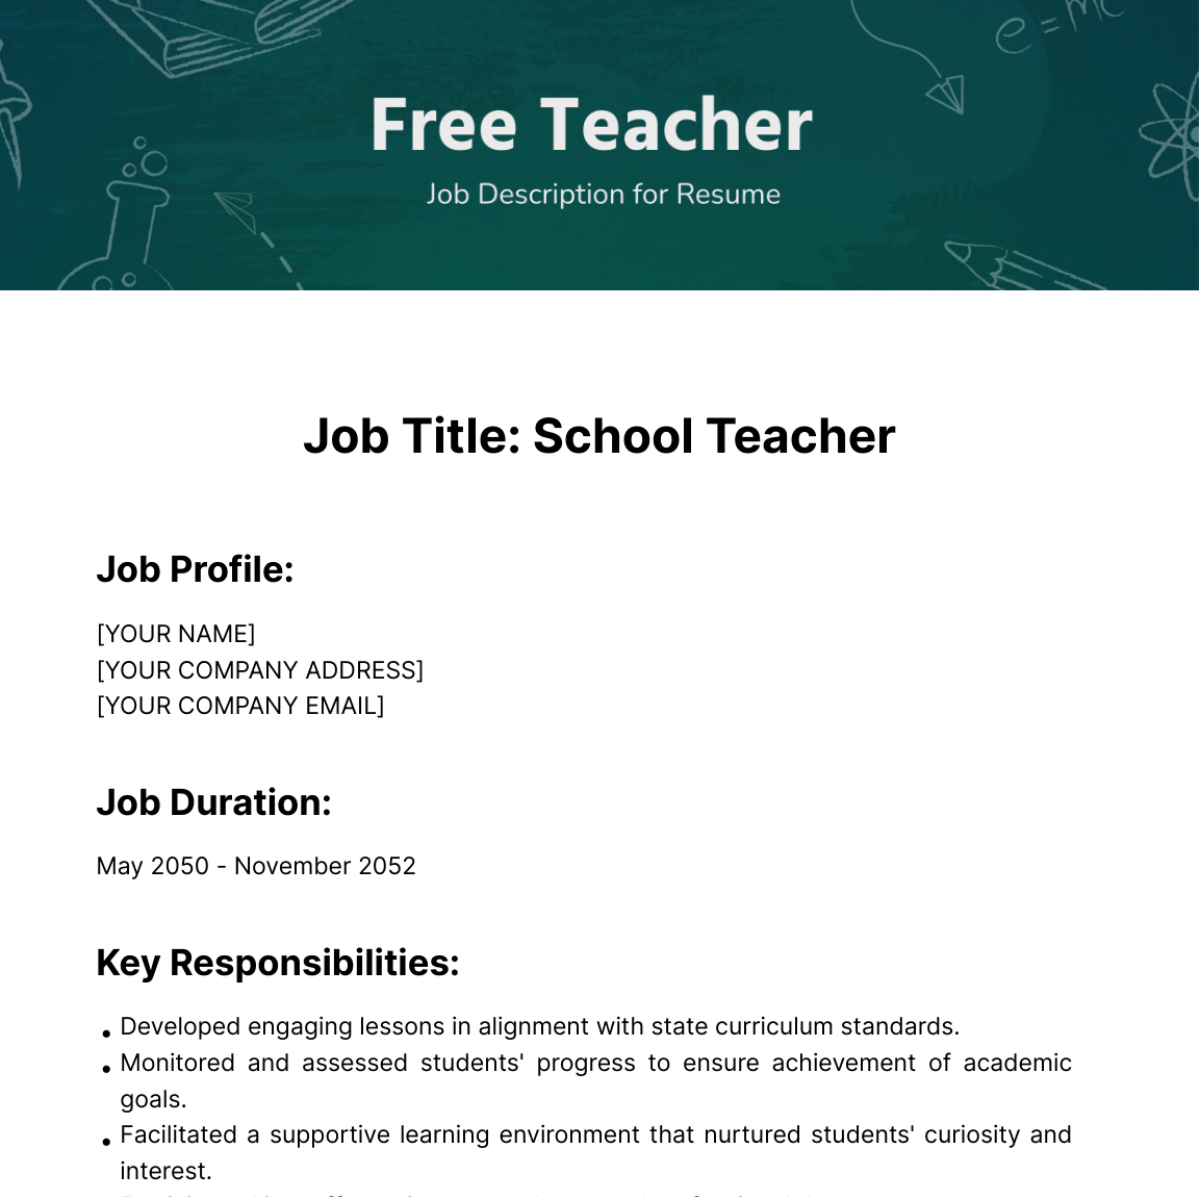 Teacher Job Description for Resume Template